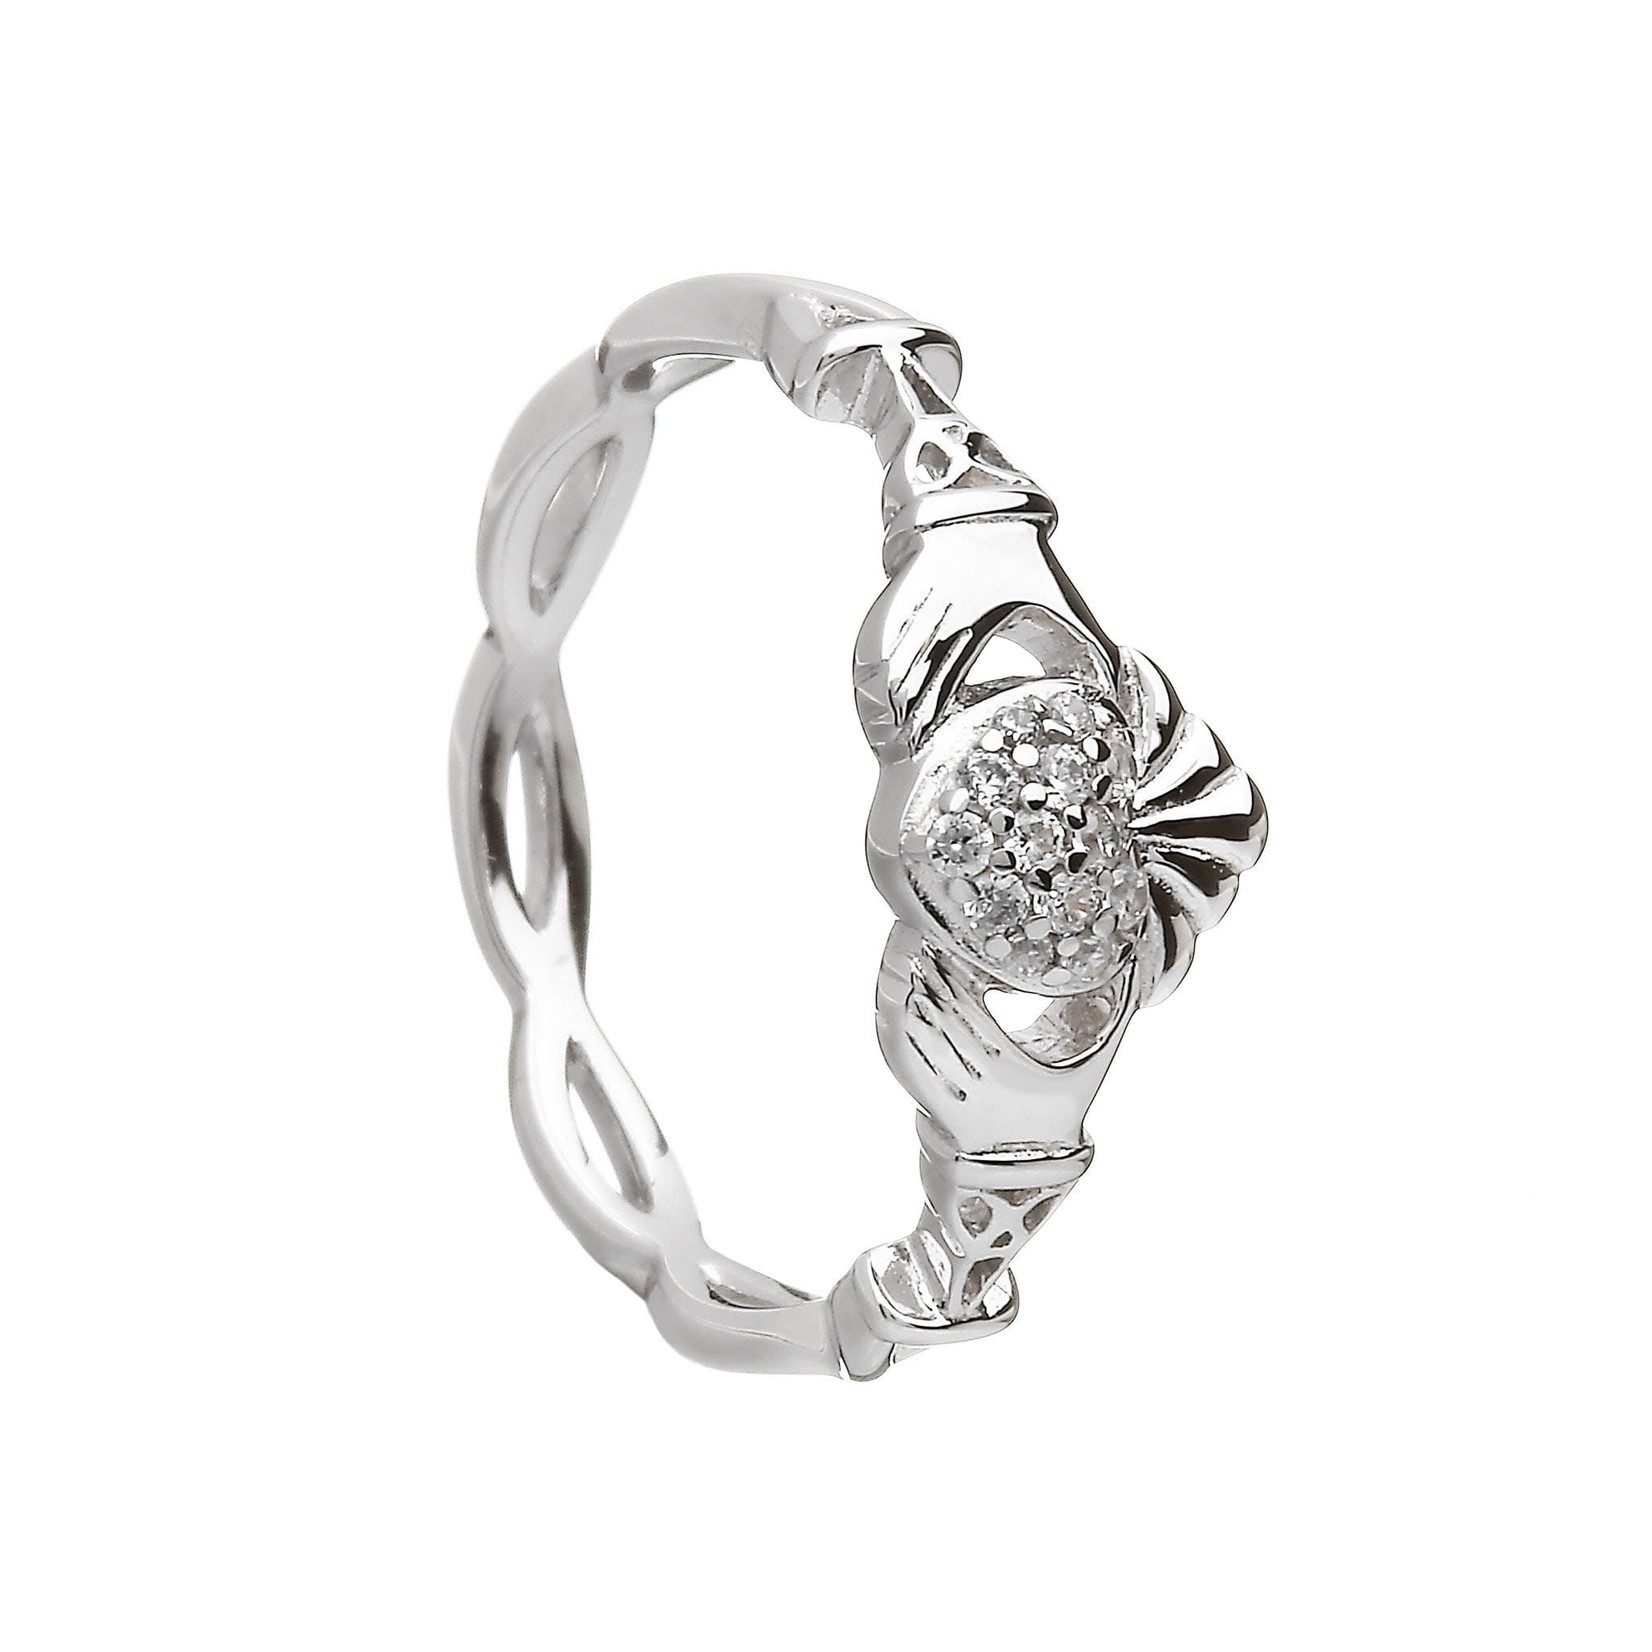 Boru Jewelry Sterling Silver Pave Set Claddagh Ring